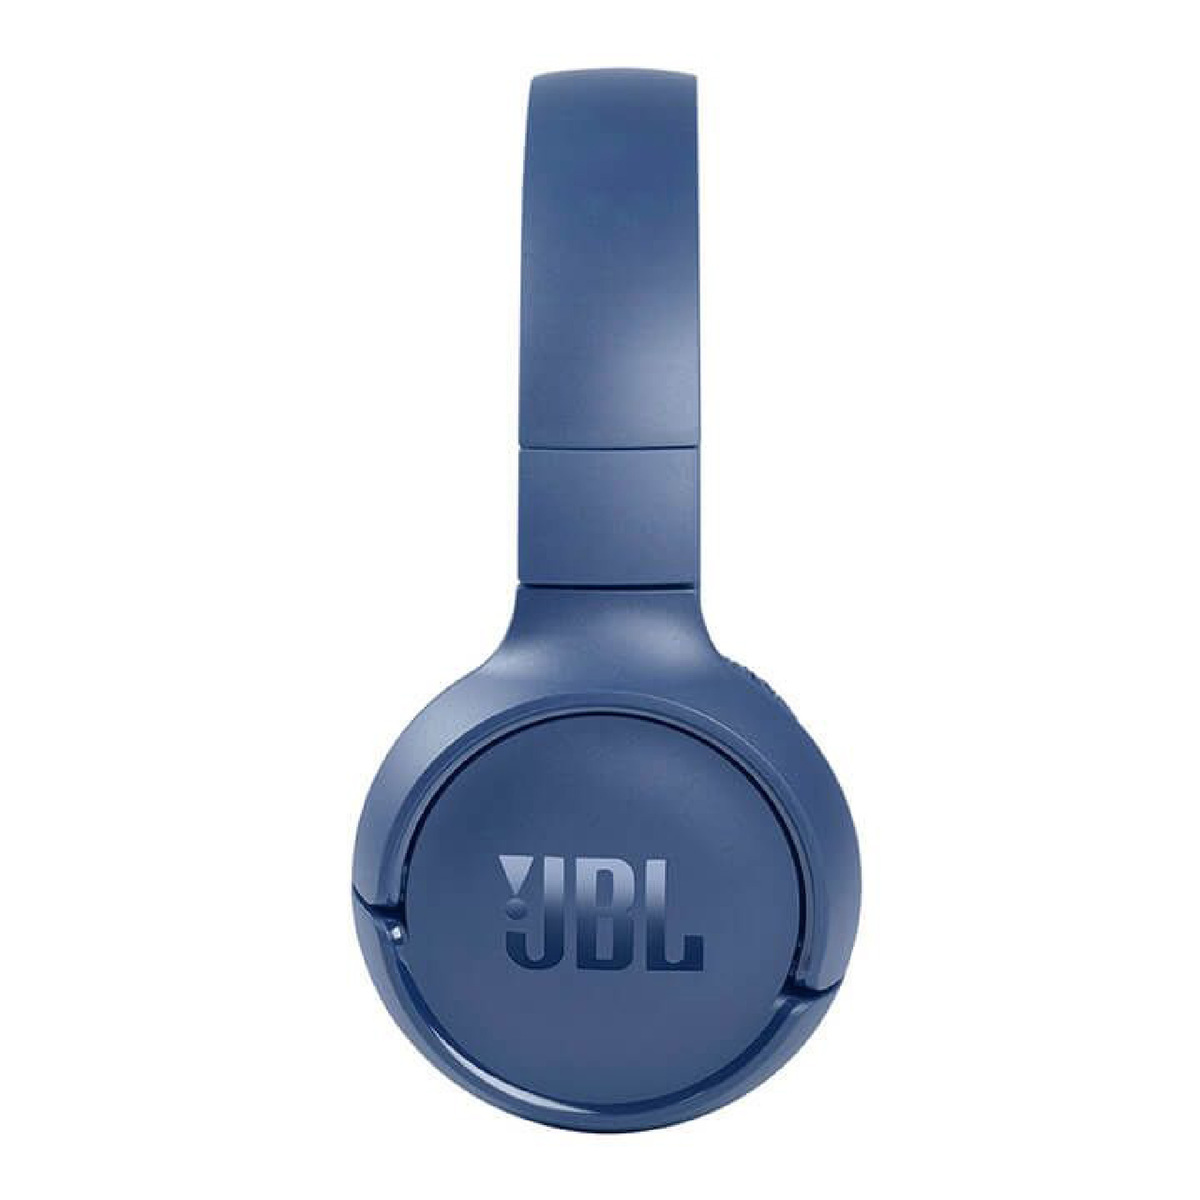 JBL Wireless On Ear Headphone JBLT570BT Blue